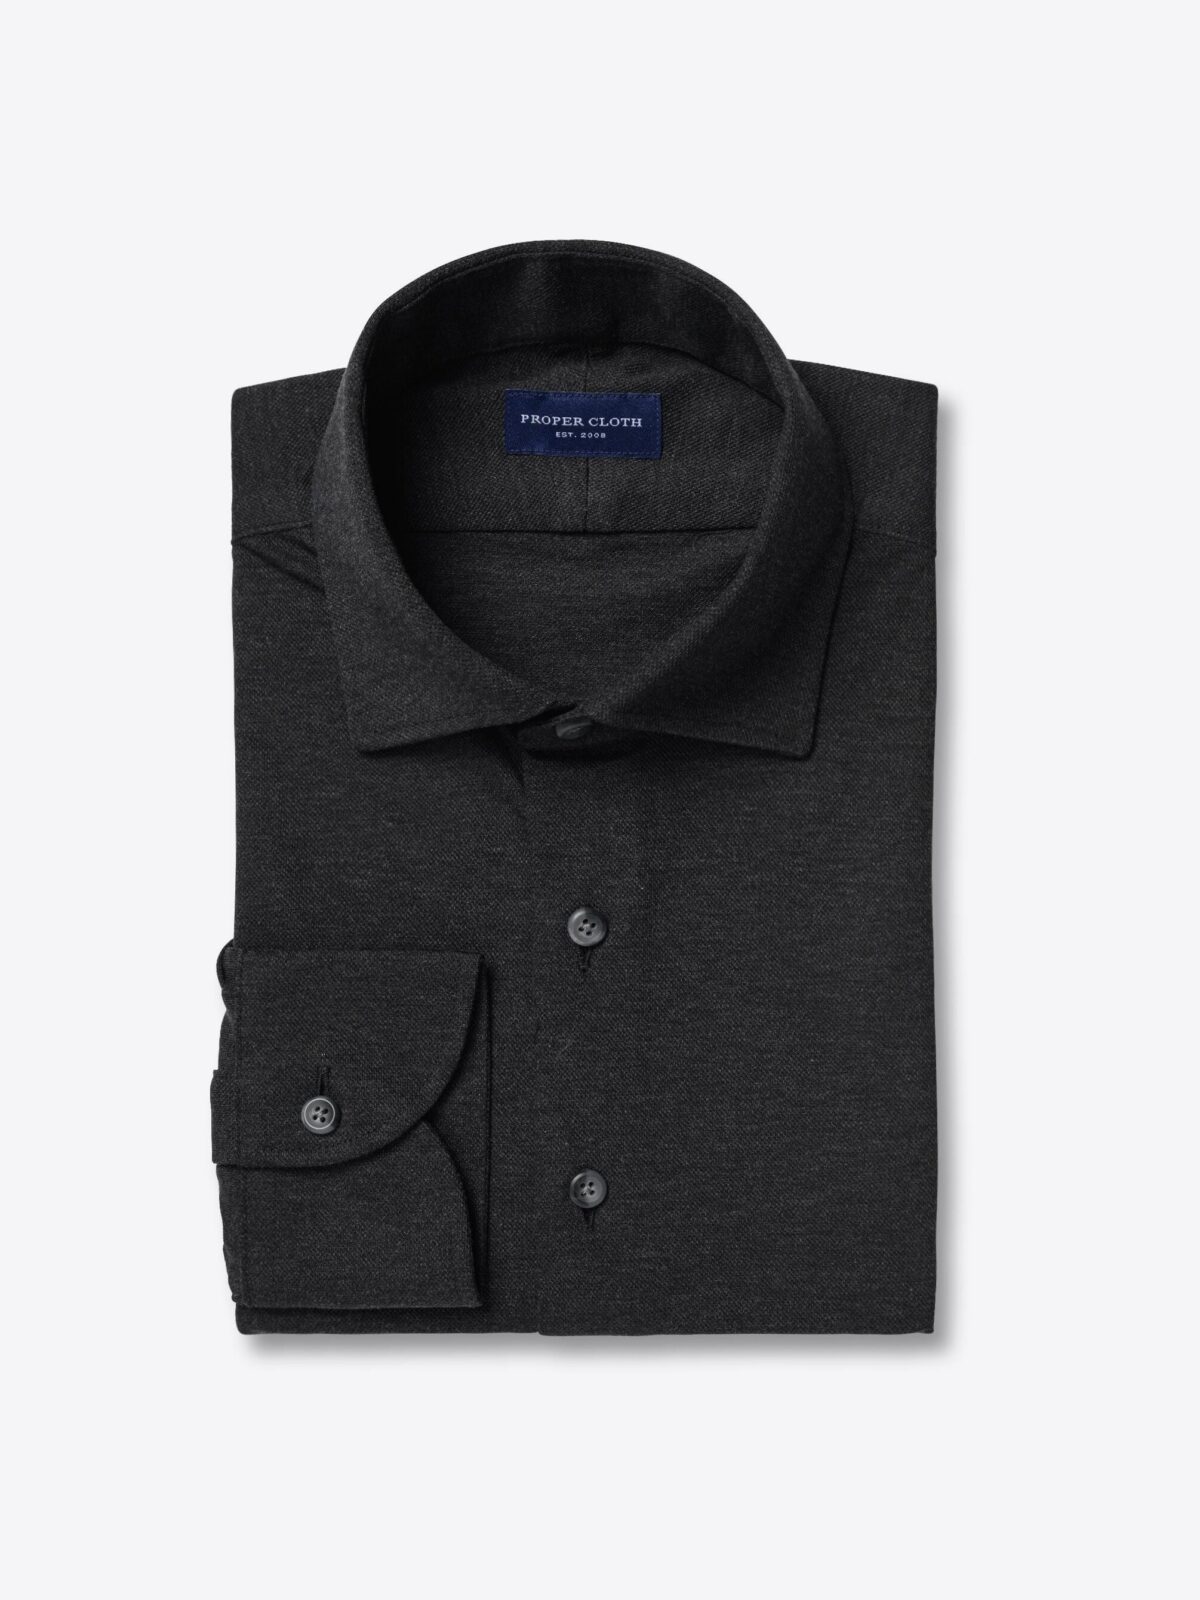 Ventura Dark Charcoal Melange Knit Pique Shirt by Proper Cloth